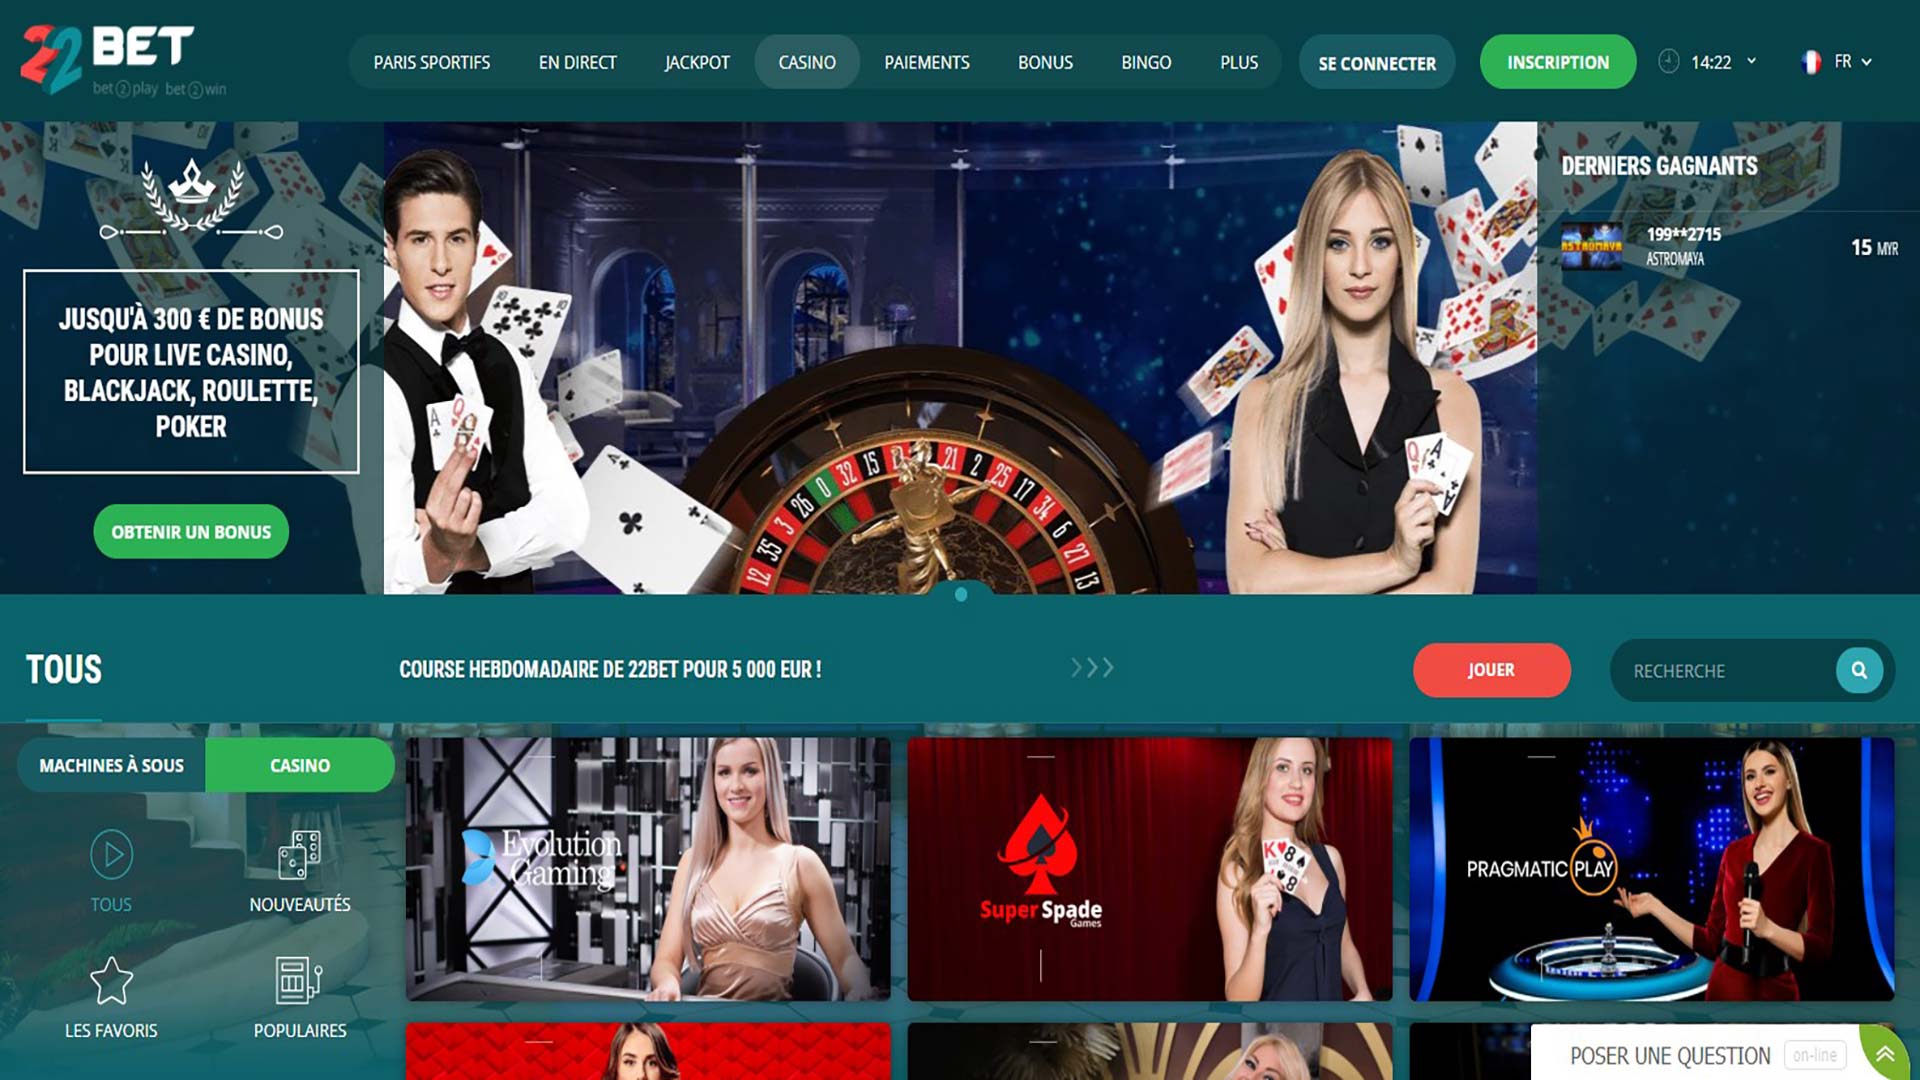 22bet casino app